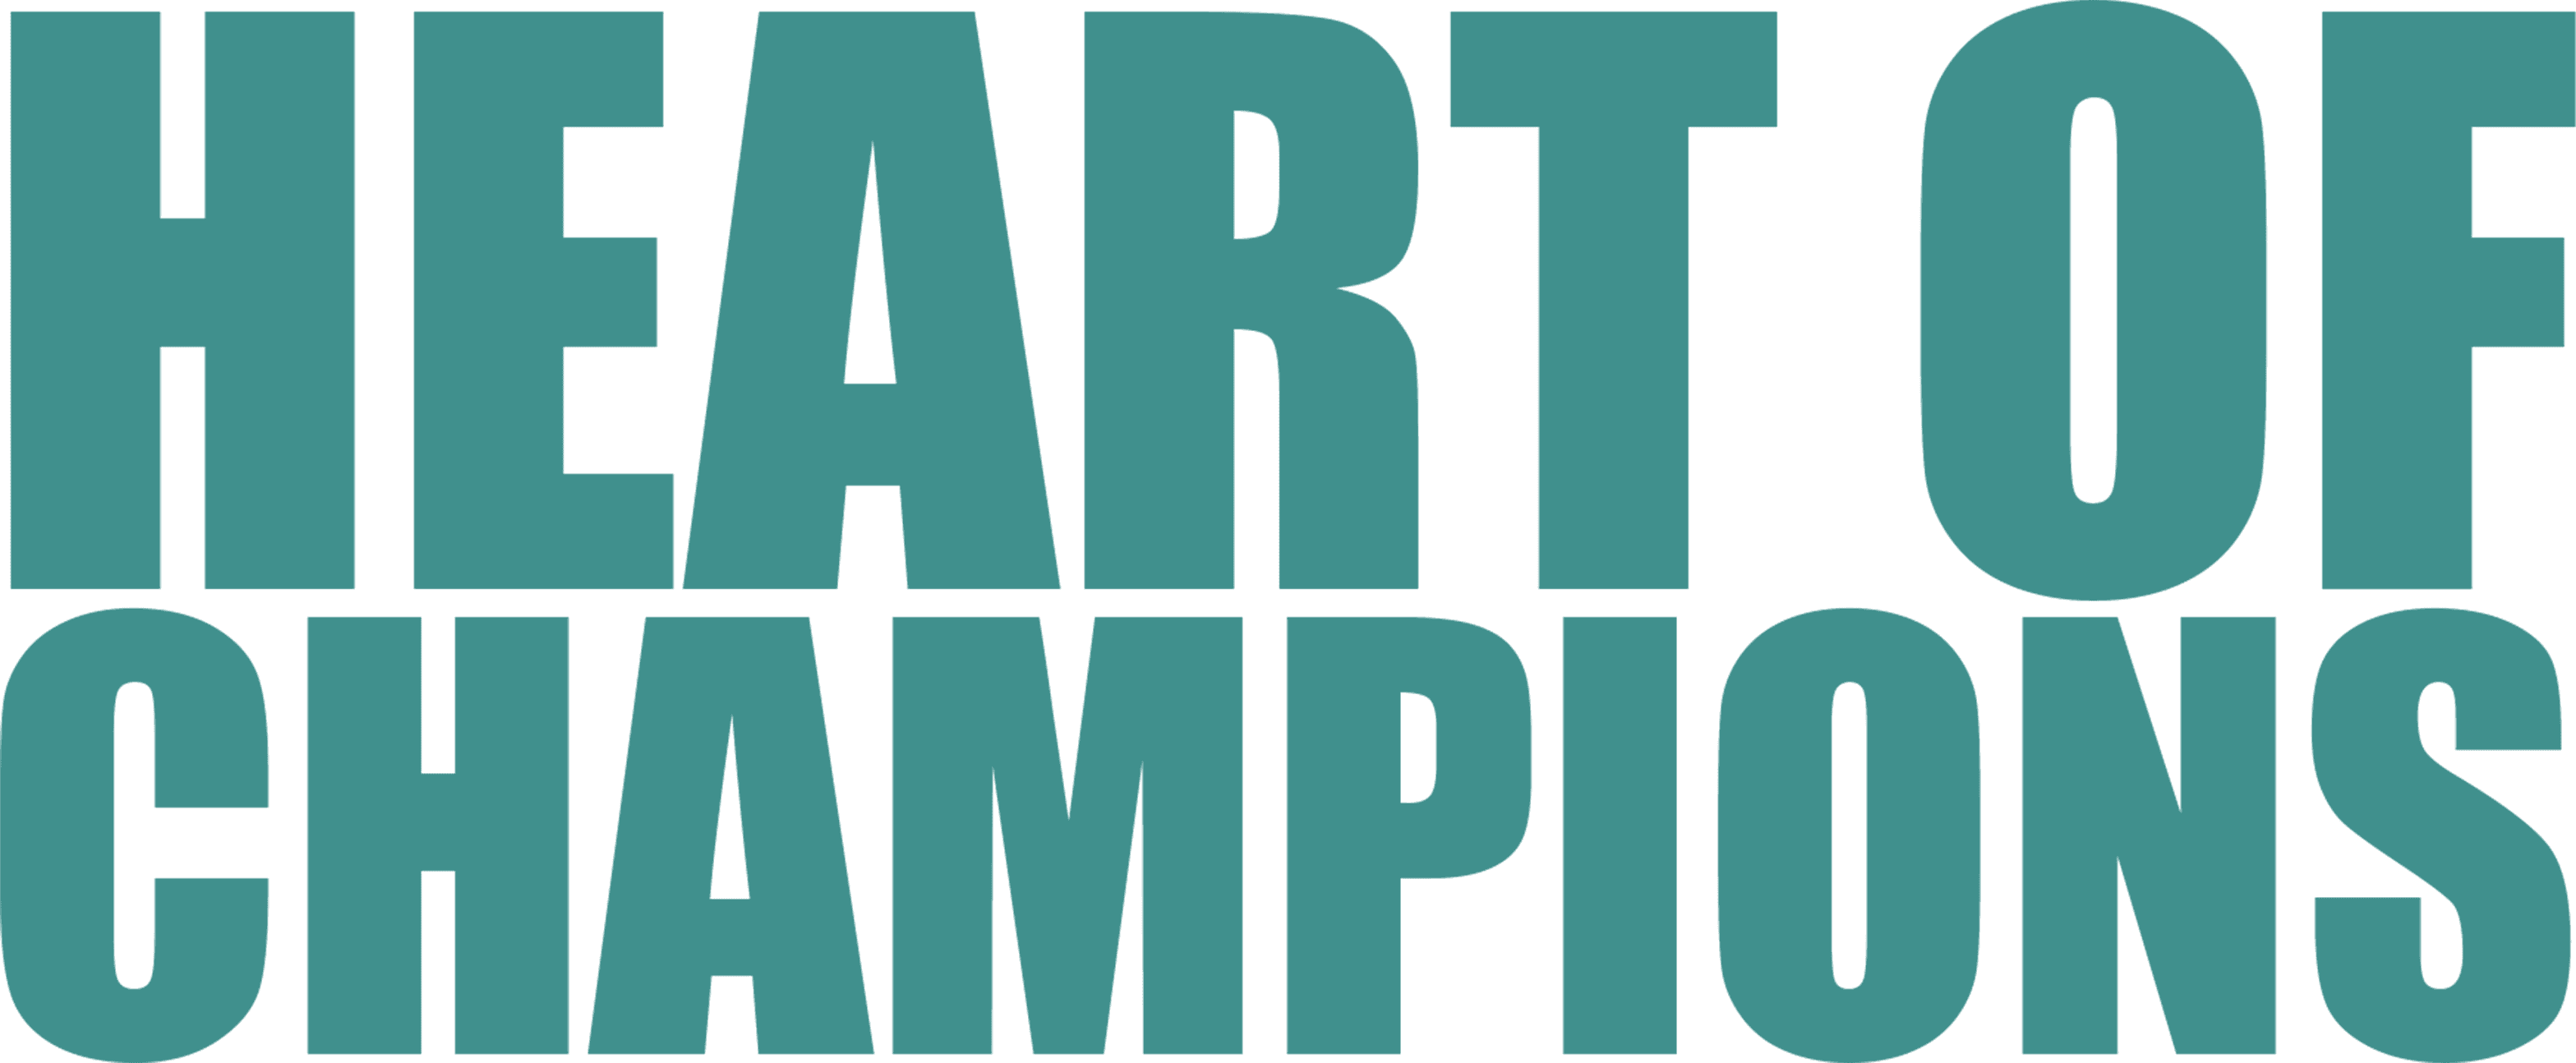 Heart of Champions logo